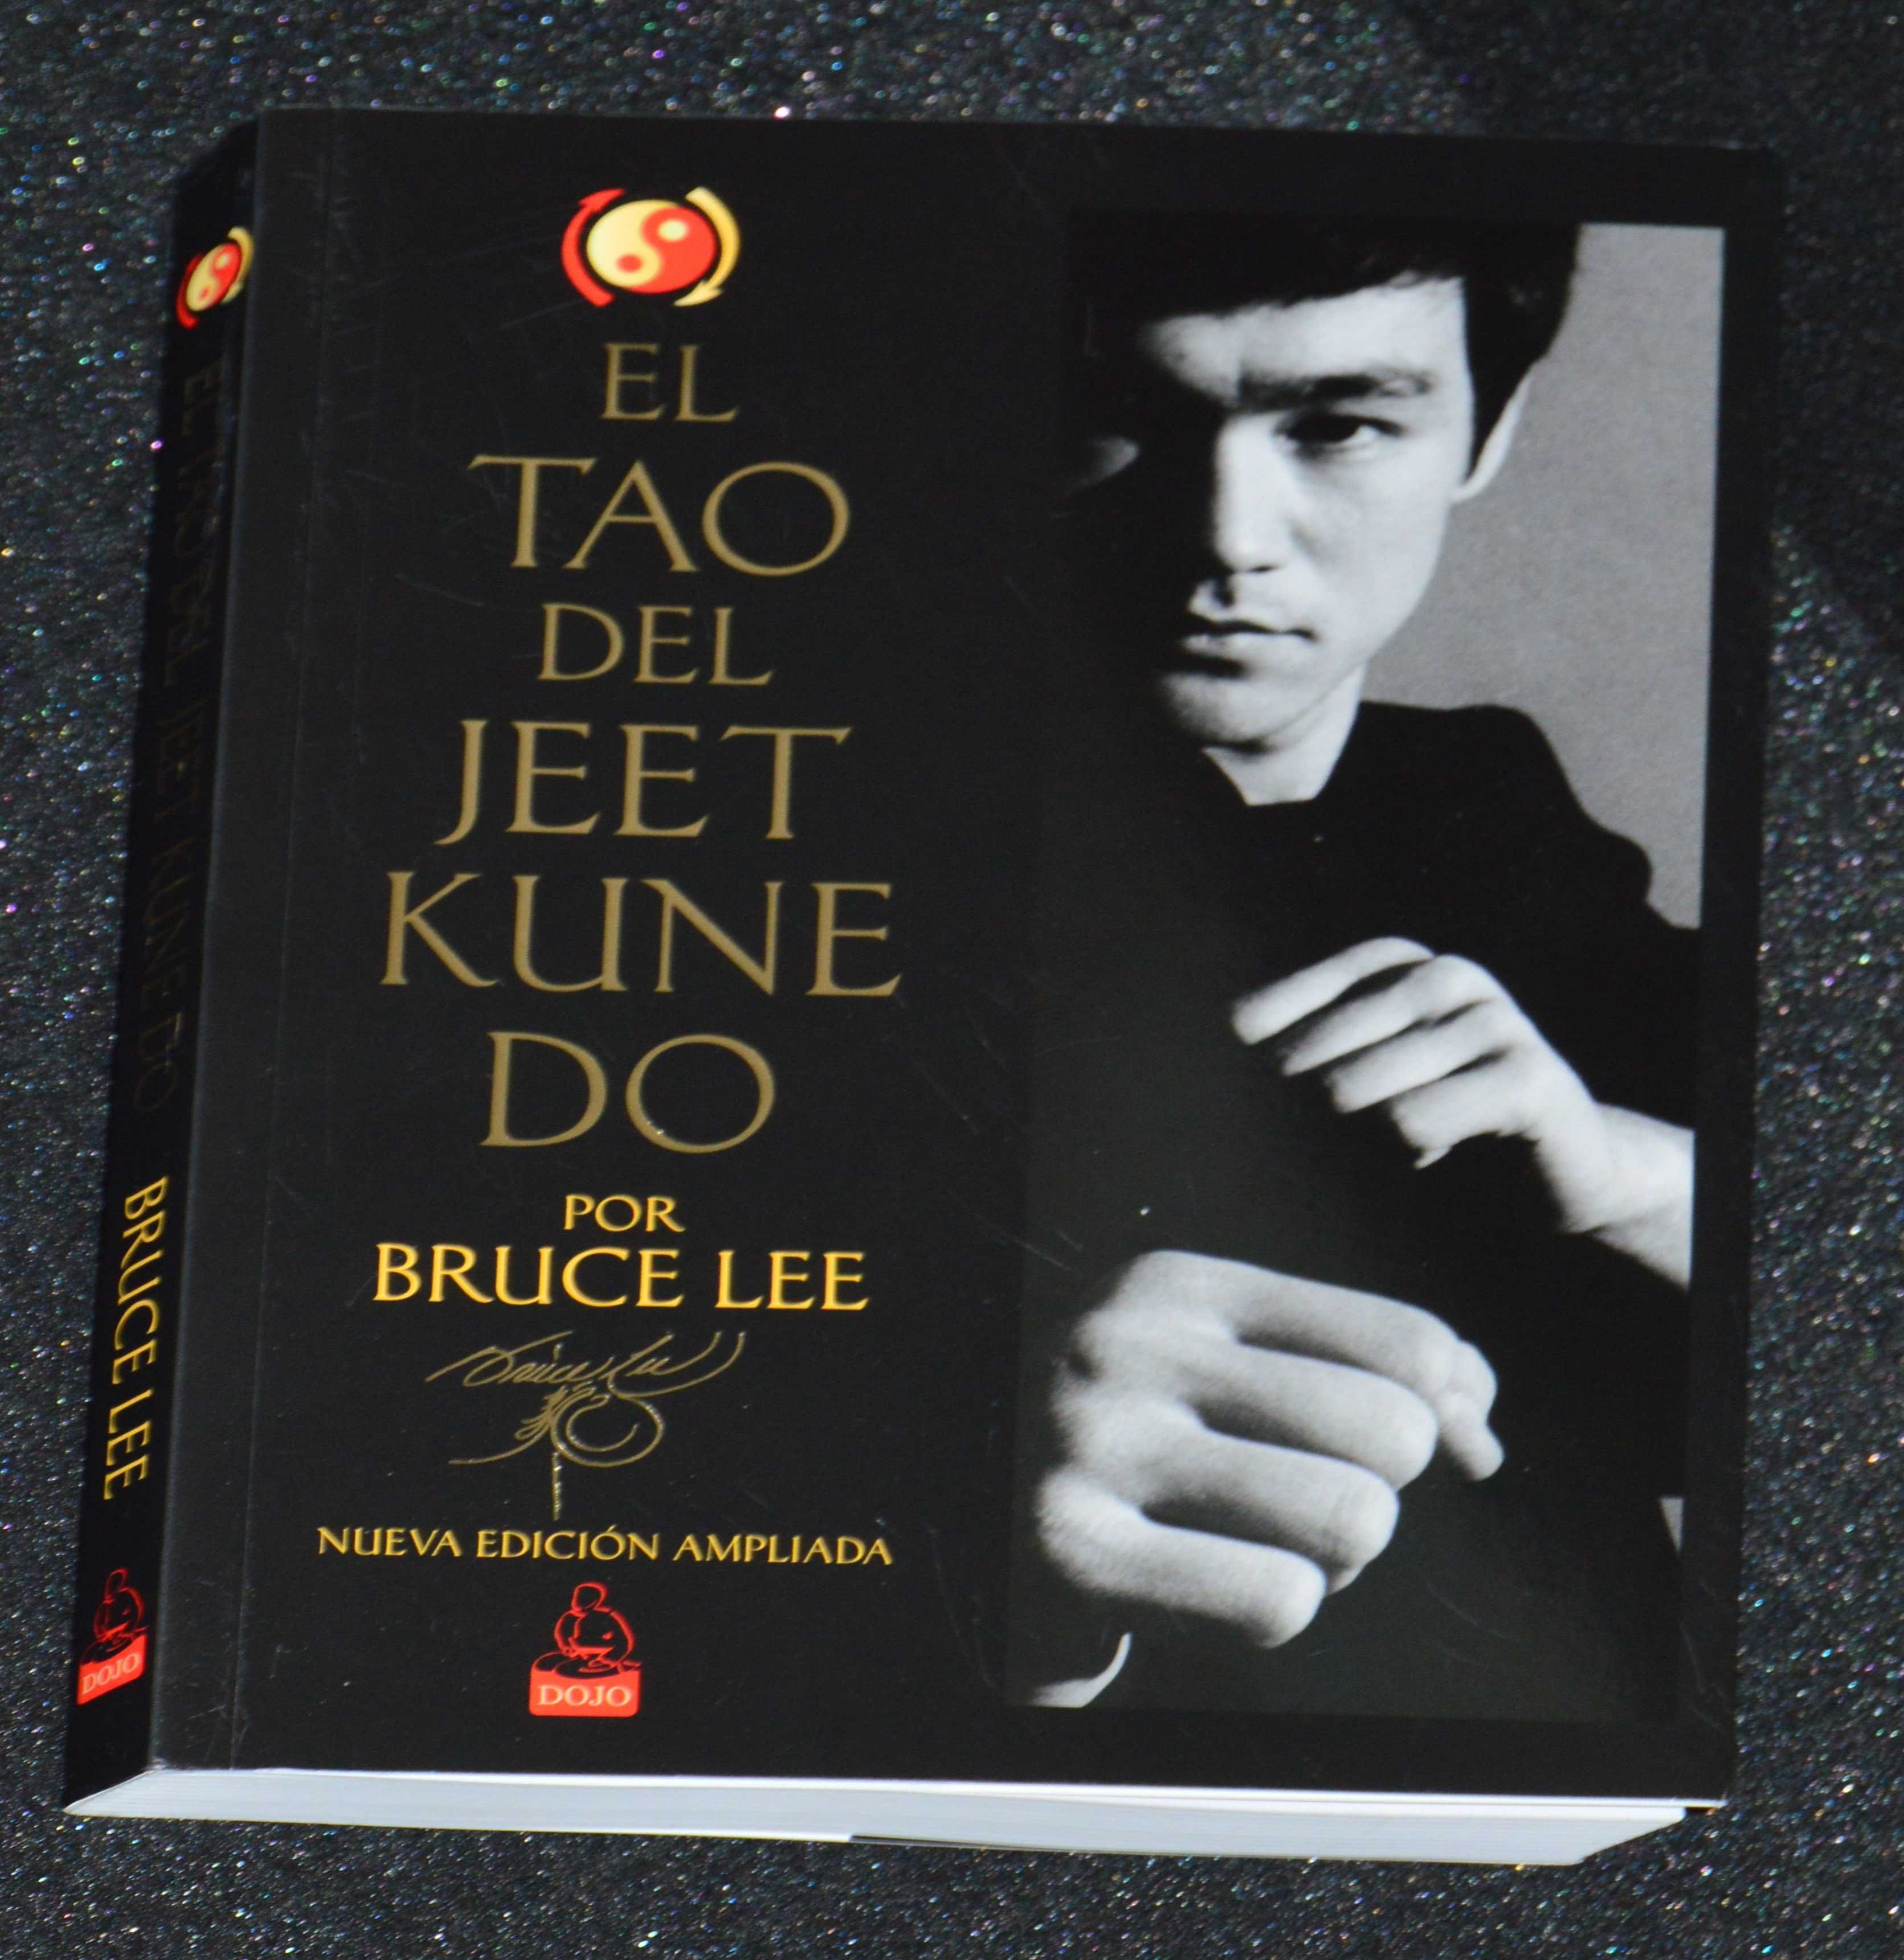 Bruce Lee Tao of Jeet Kune Do Gold edition Espanhol